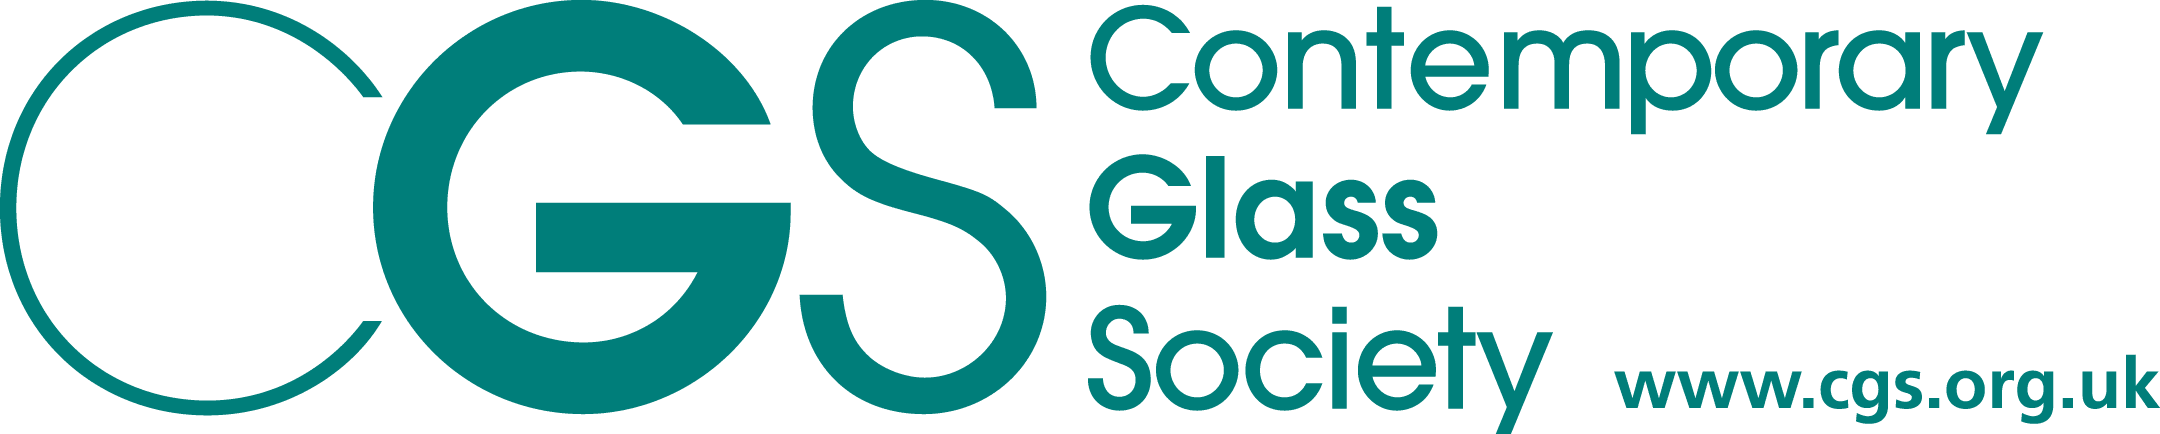 Contemporary Glass Society